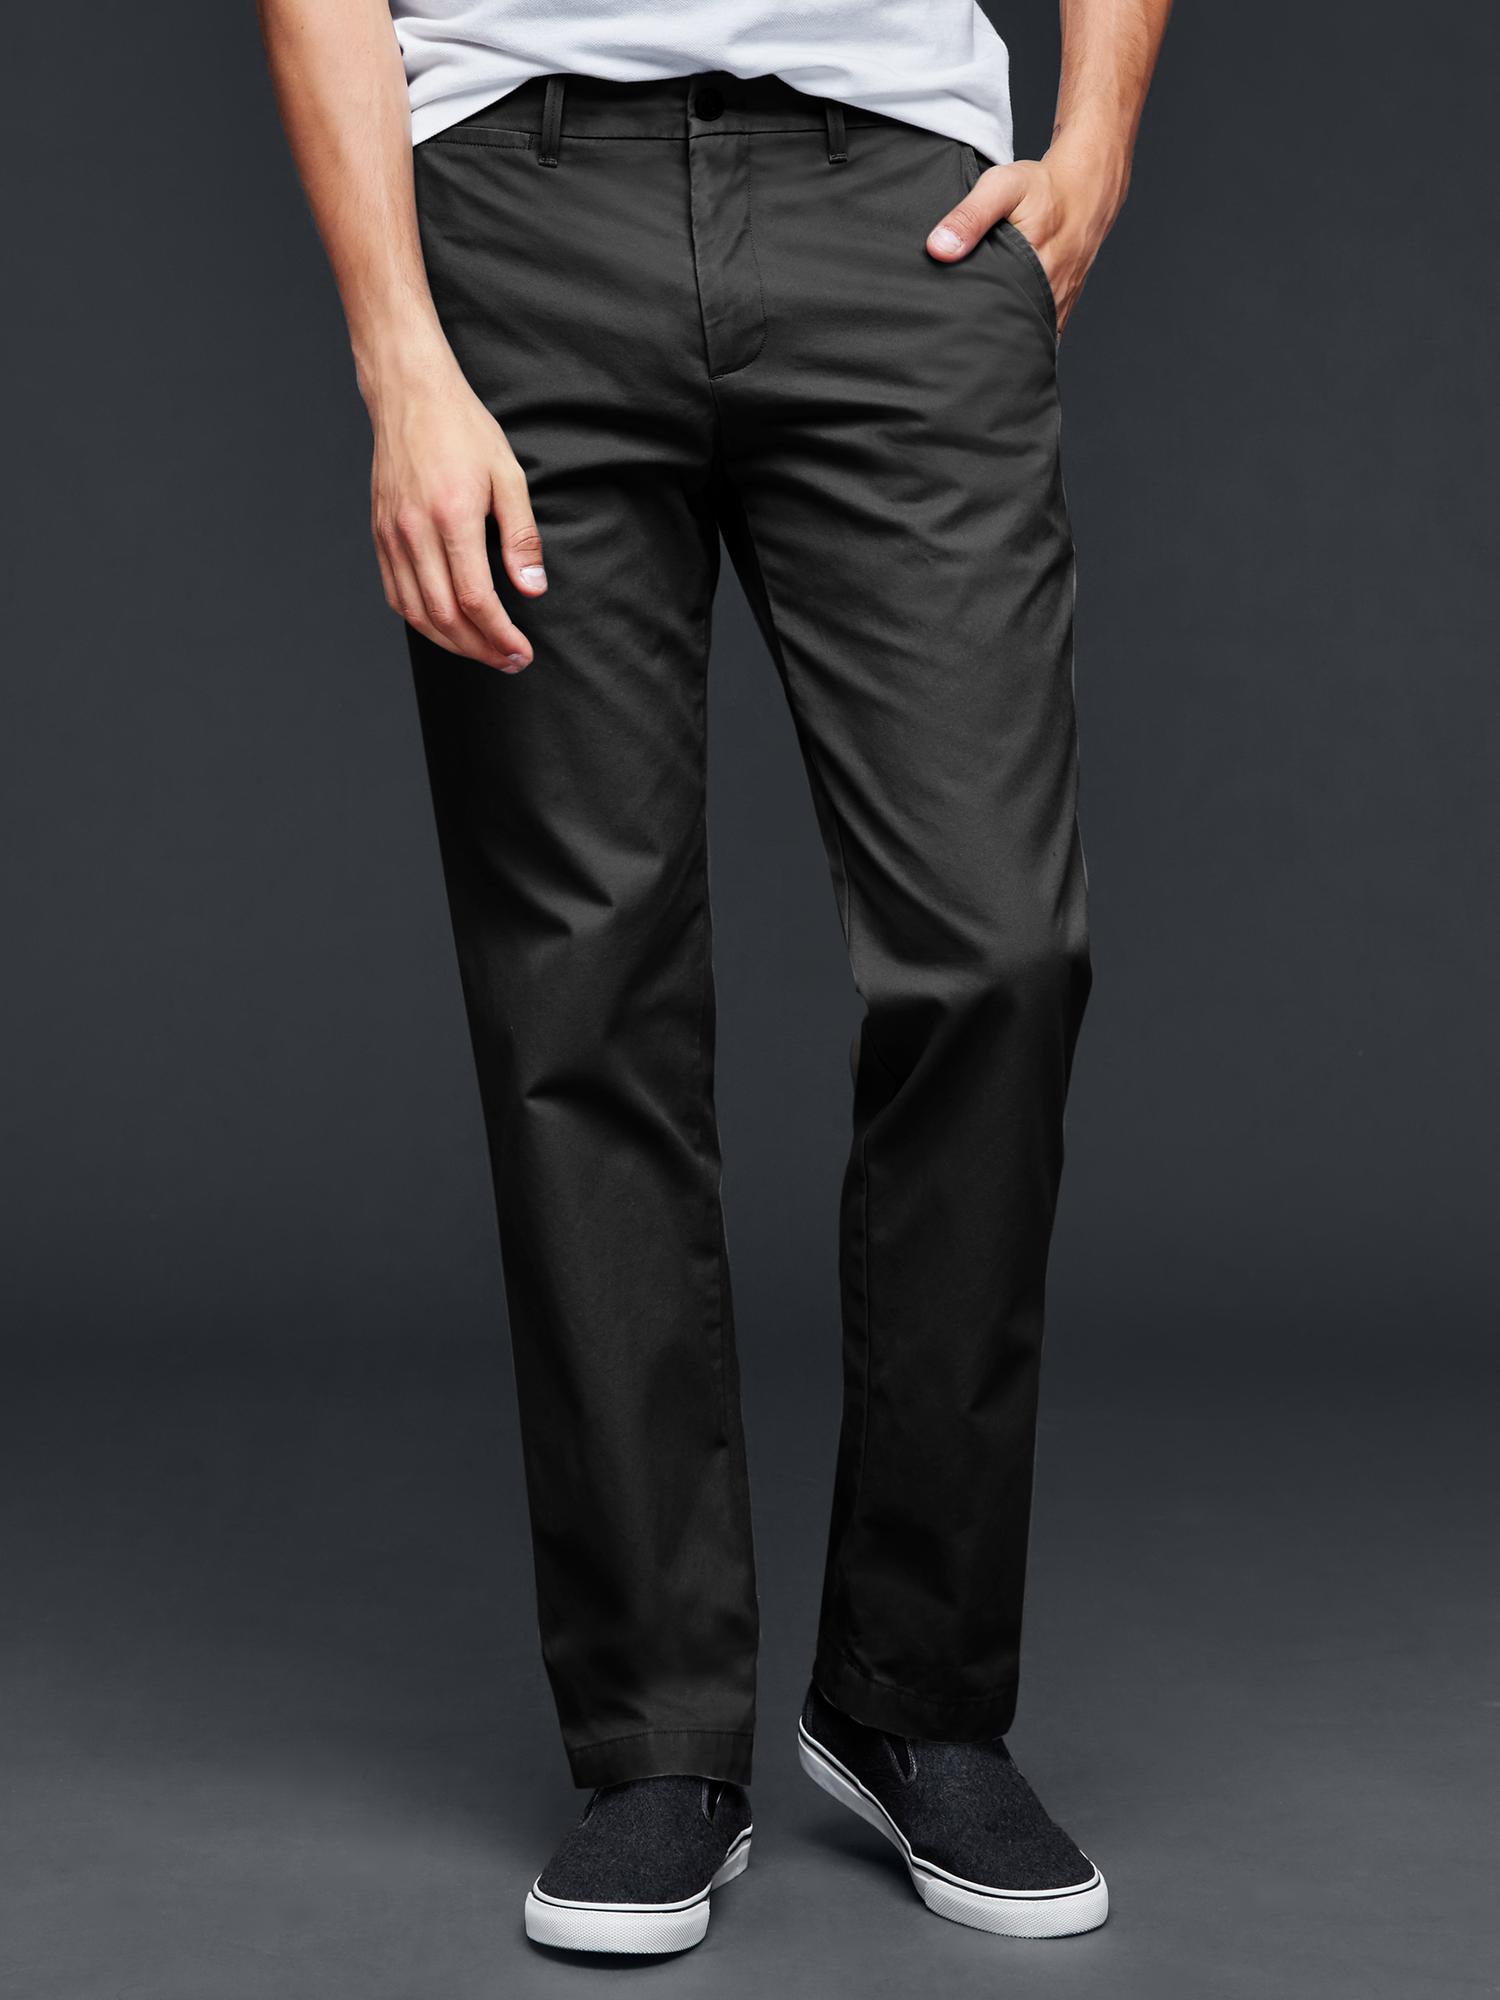 Gap Khakis Tailored Straight Fit Khaki Pants, Men's 29x30 (Grey